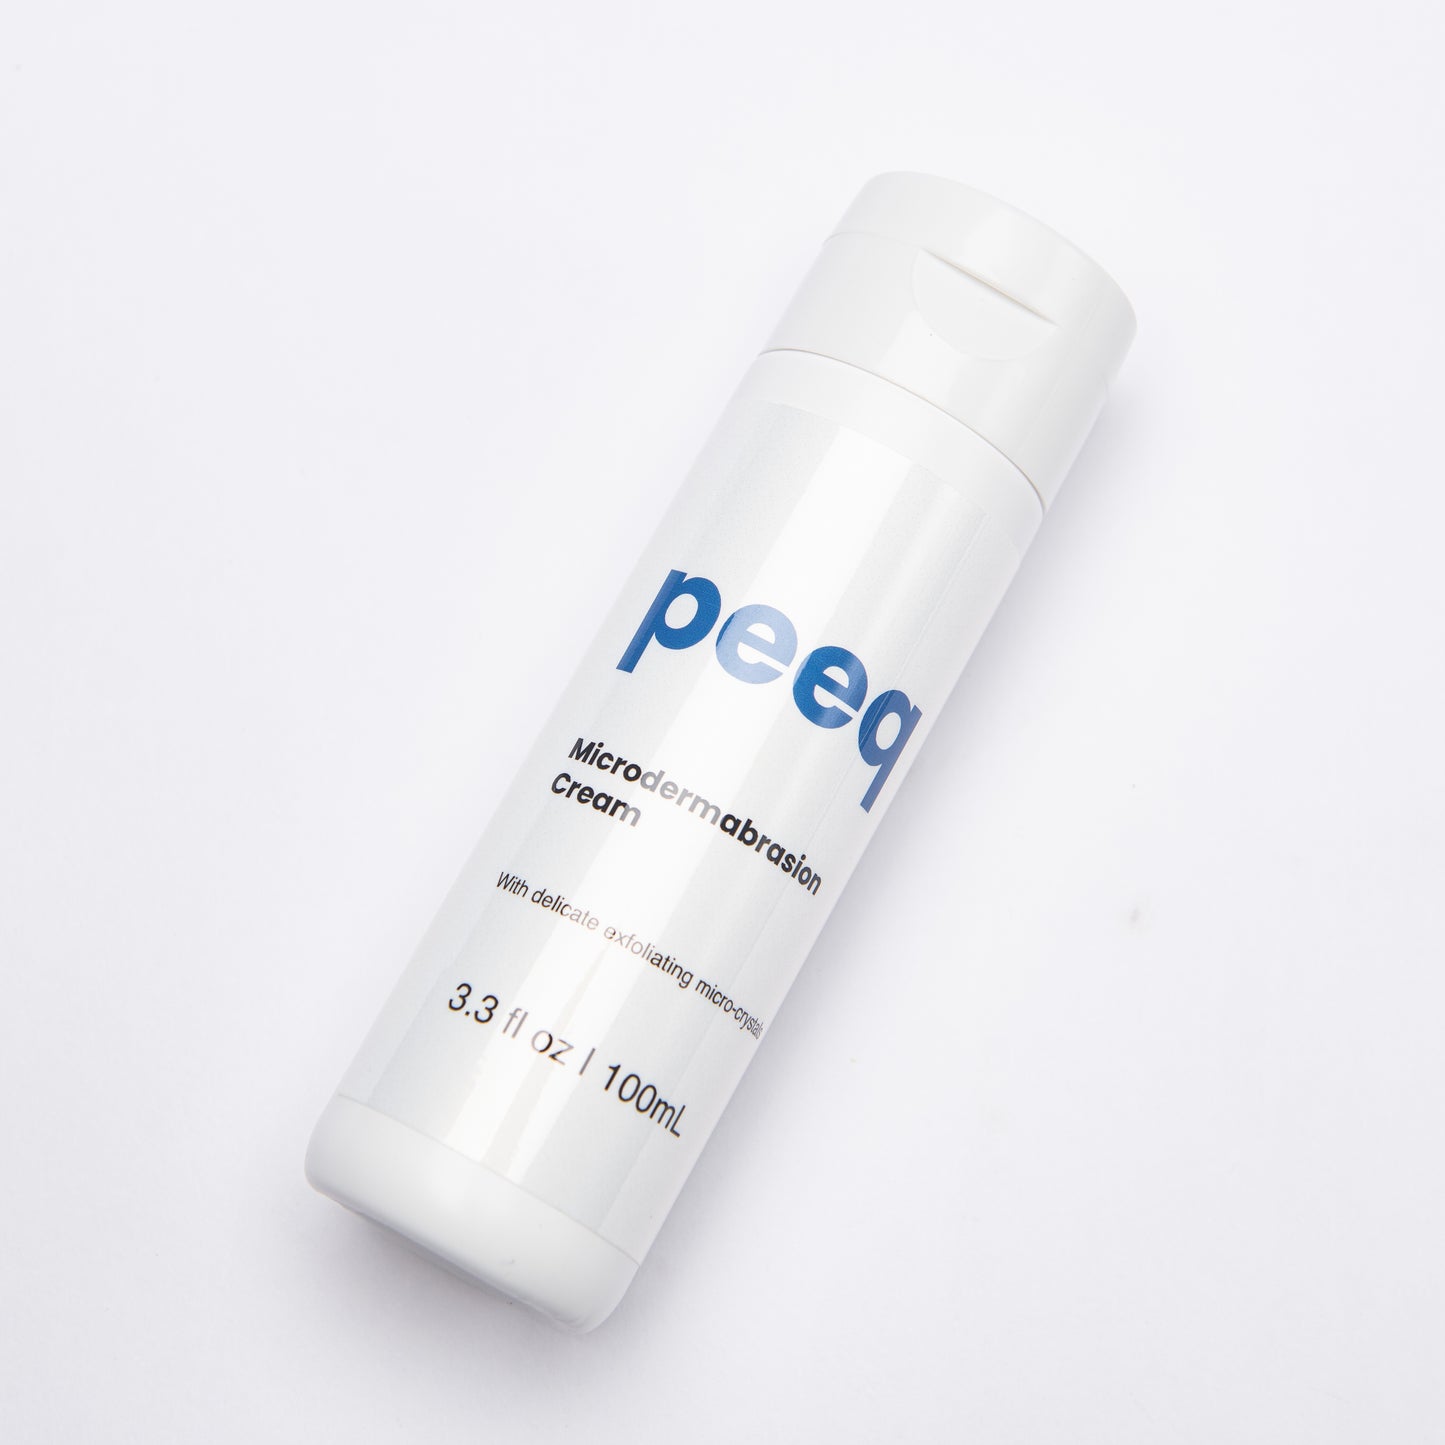 Peeq Microdermabrasion Cream, 3.3 oz